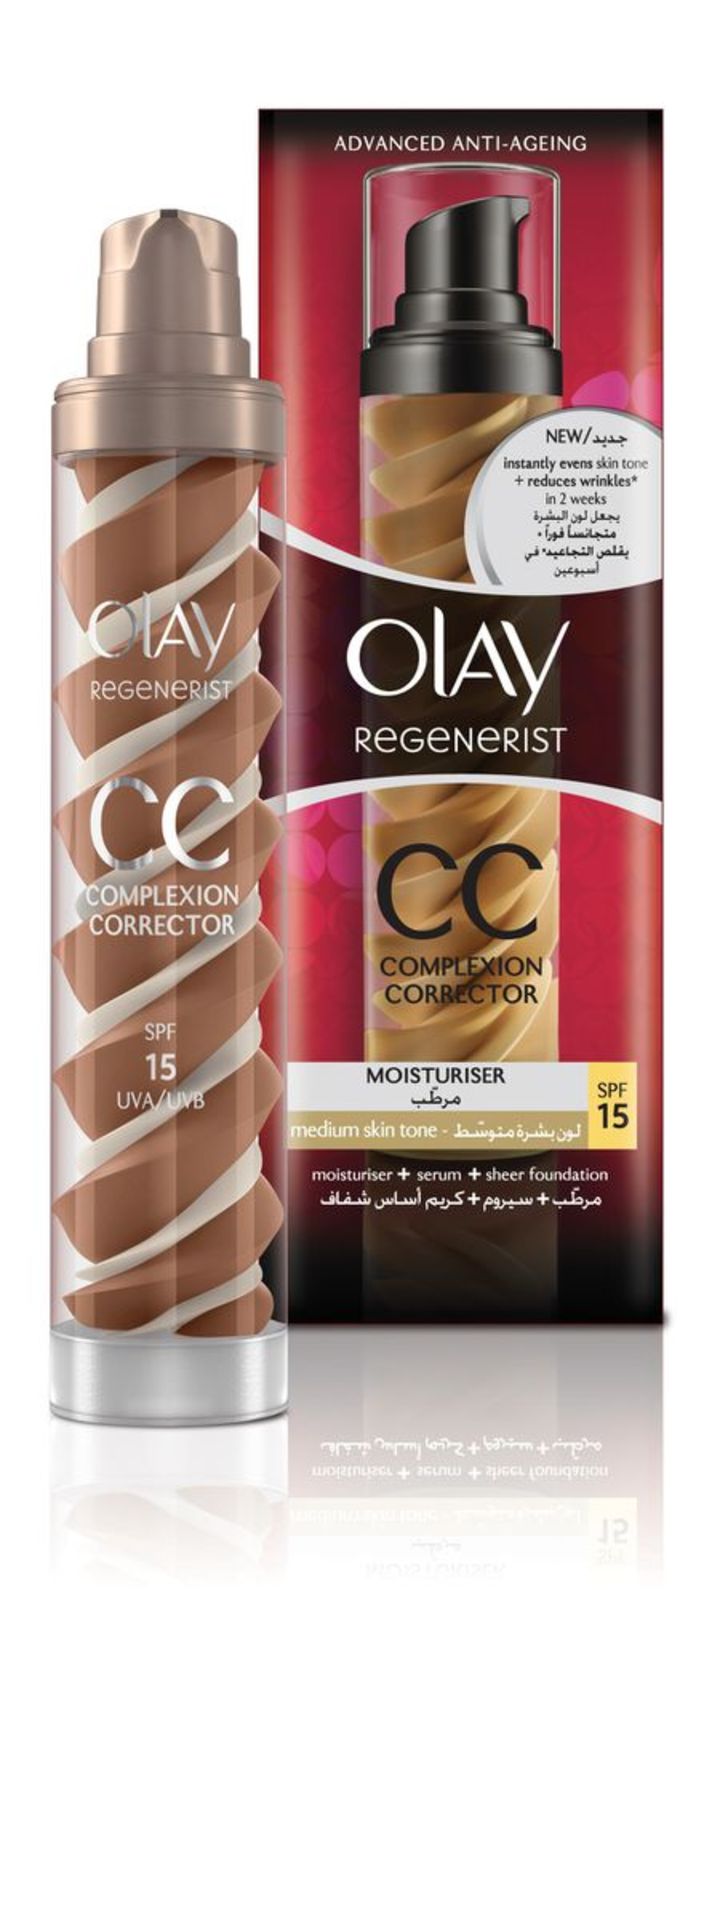 V Brand New 50ml Olay Regenerist Complexion Corrector Moisturiser-Medium Skin Tone-Evens Your